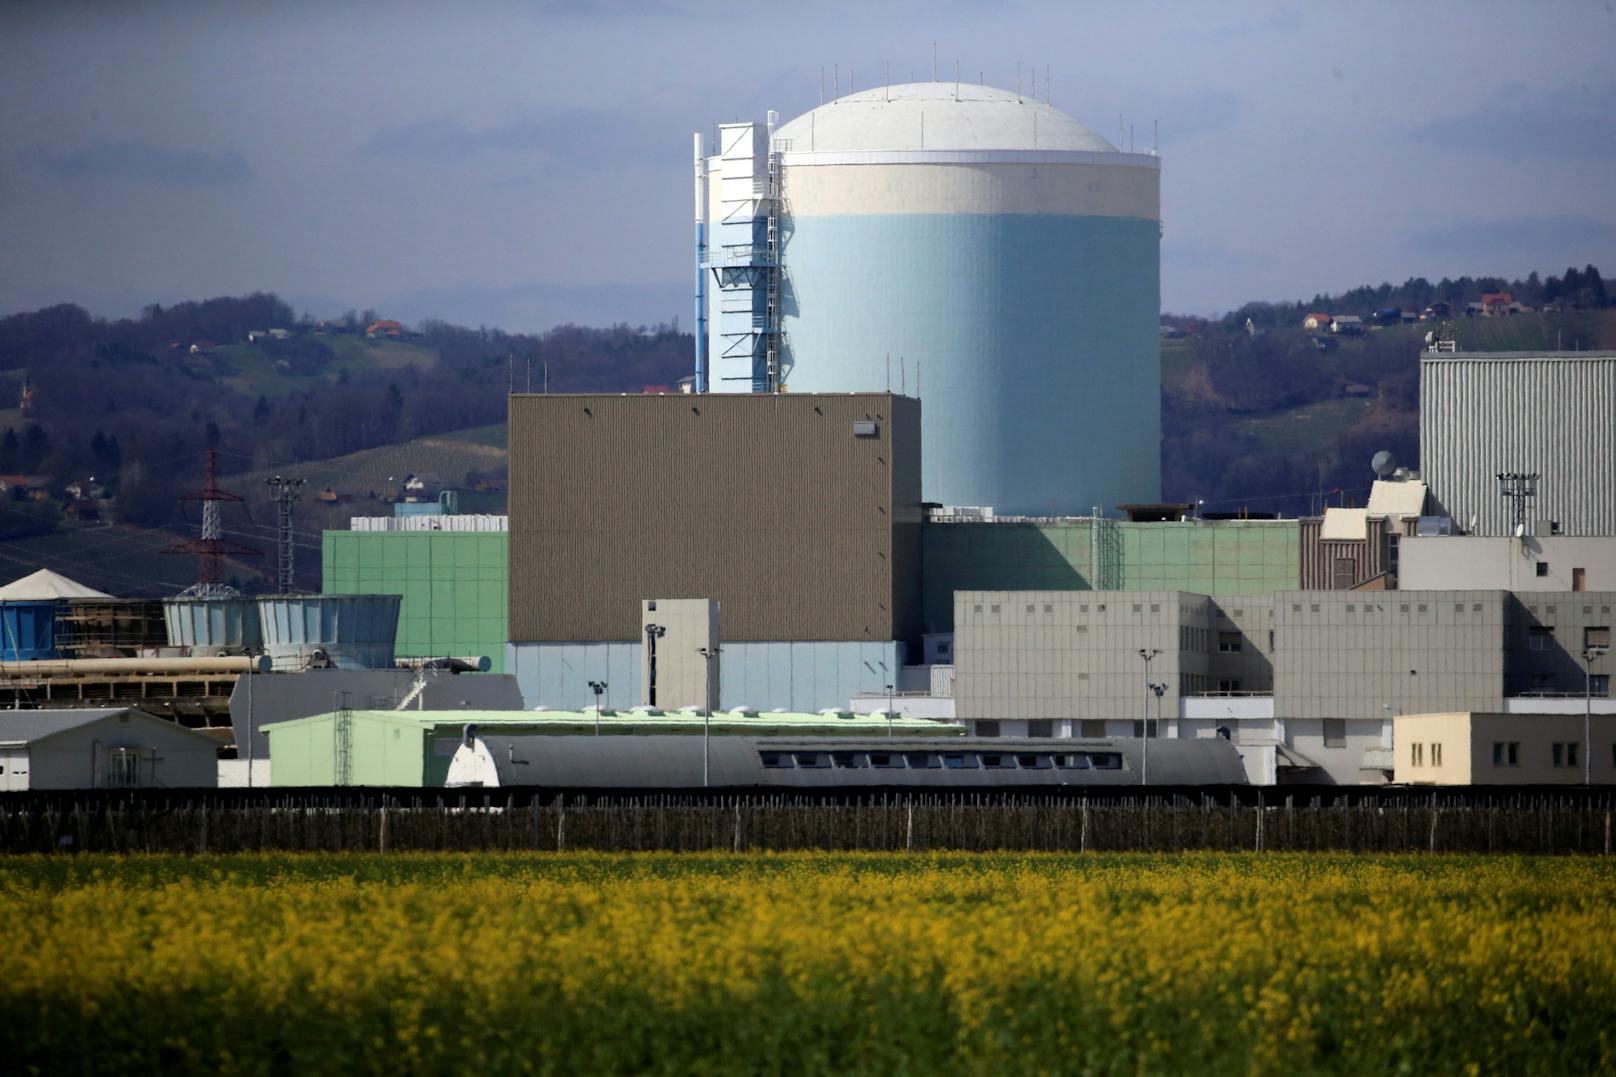 Blick auf das Kernkraftwerk Krško in Slowenien. Archivbild 2020.